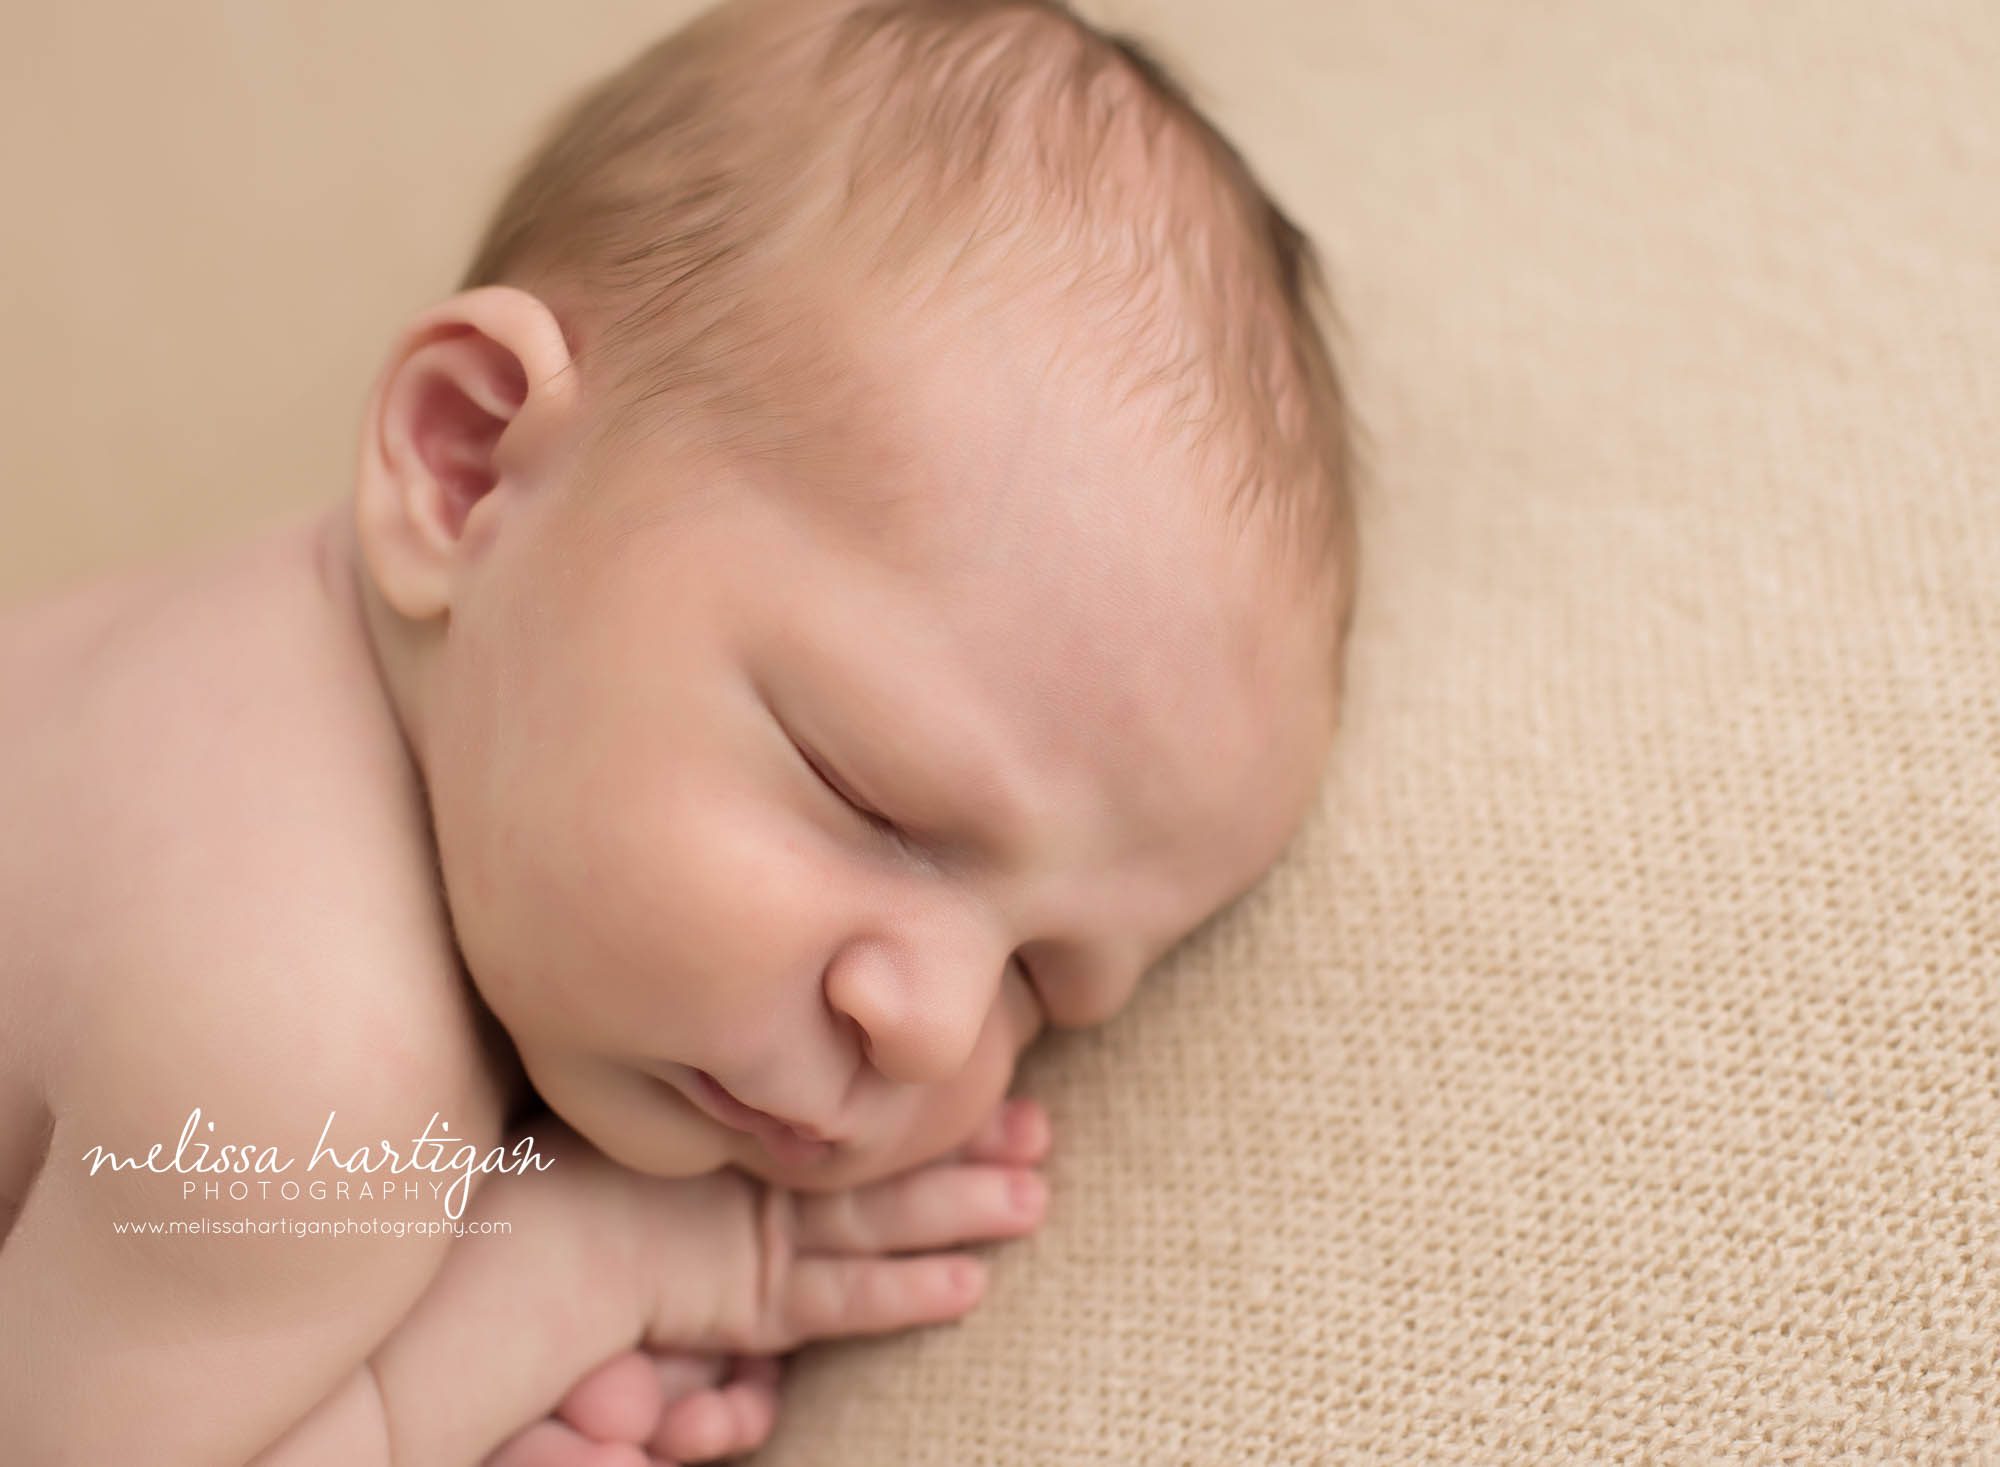 Melissa Hartigan Photography Newborn Photographer Connecticut baby boy sleeping on tan blanket close-up